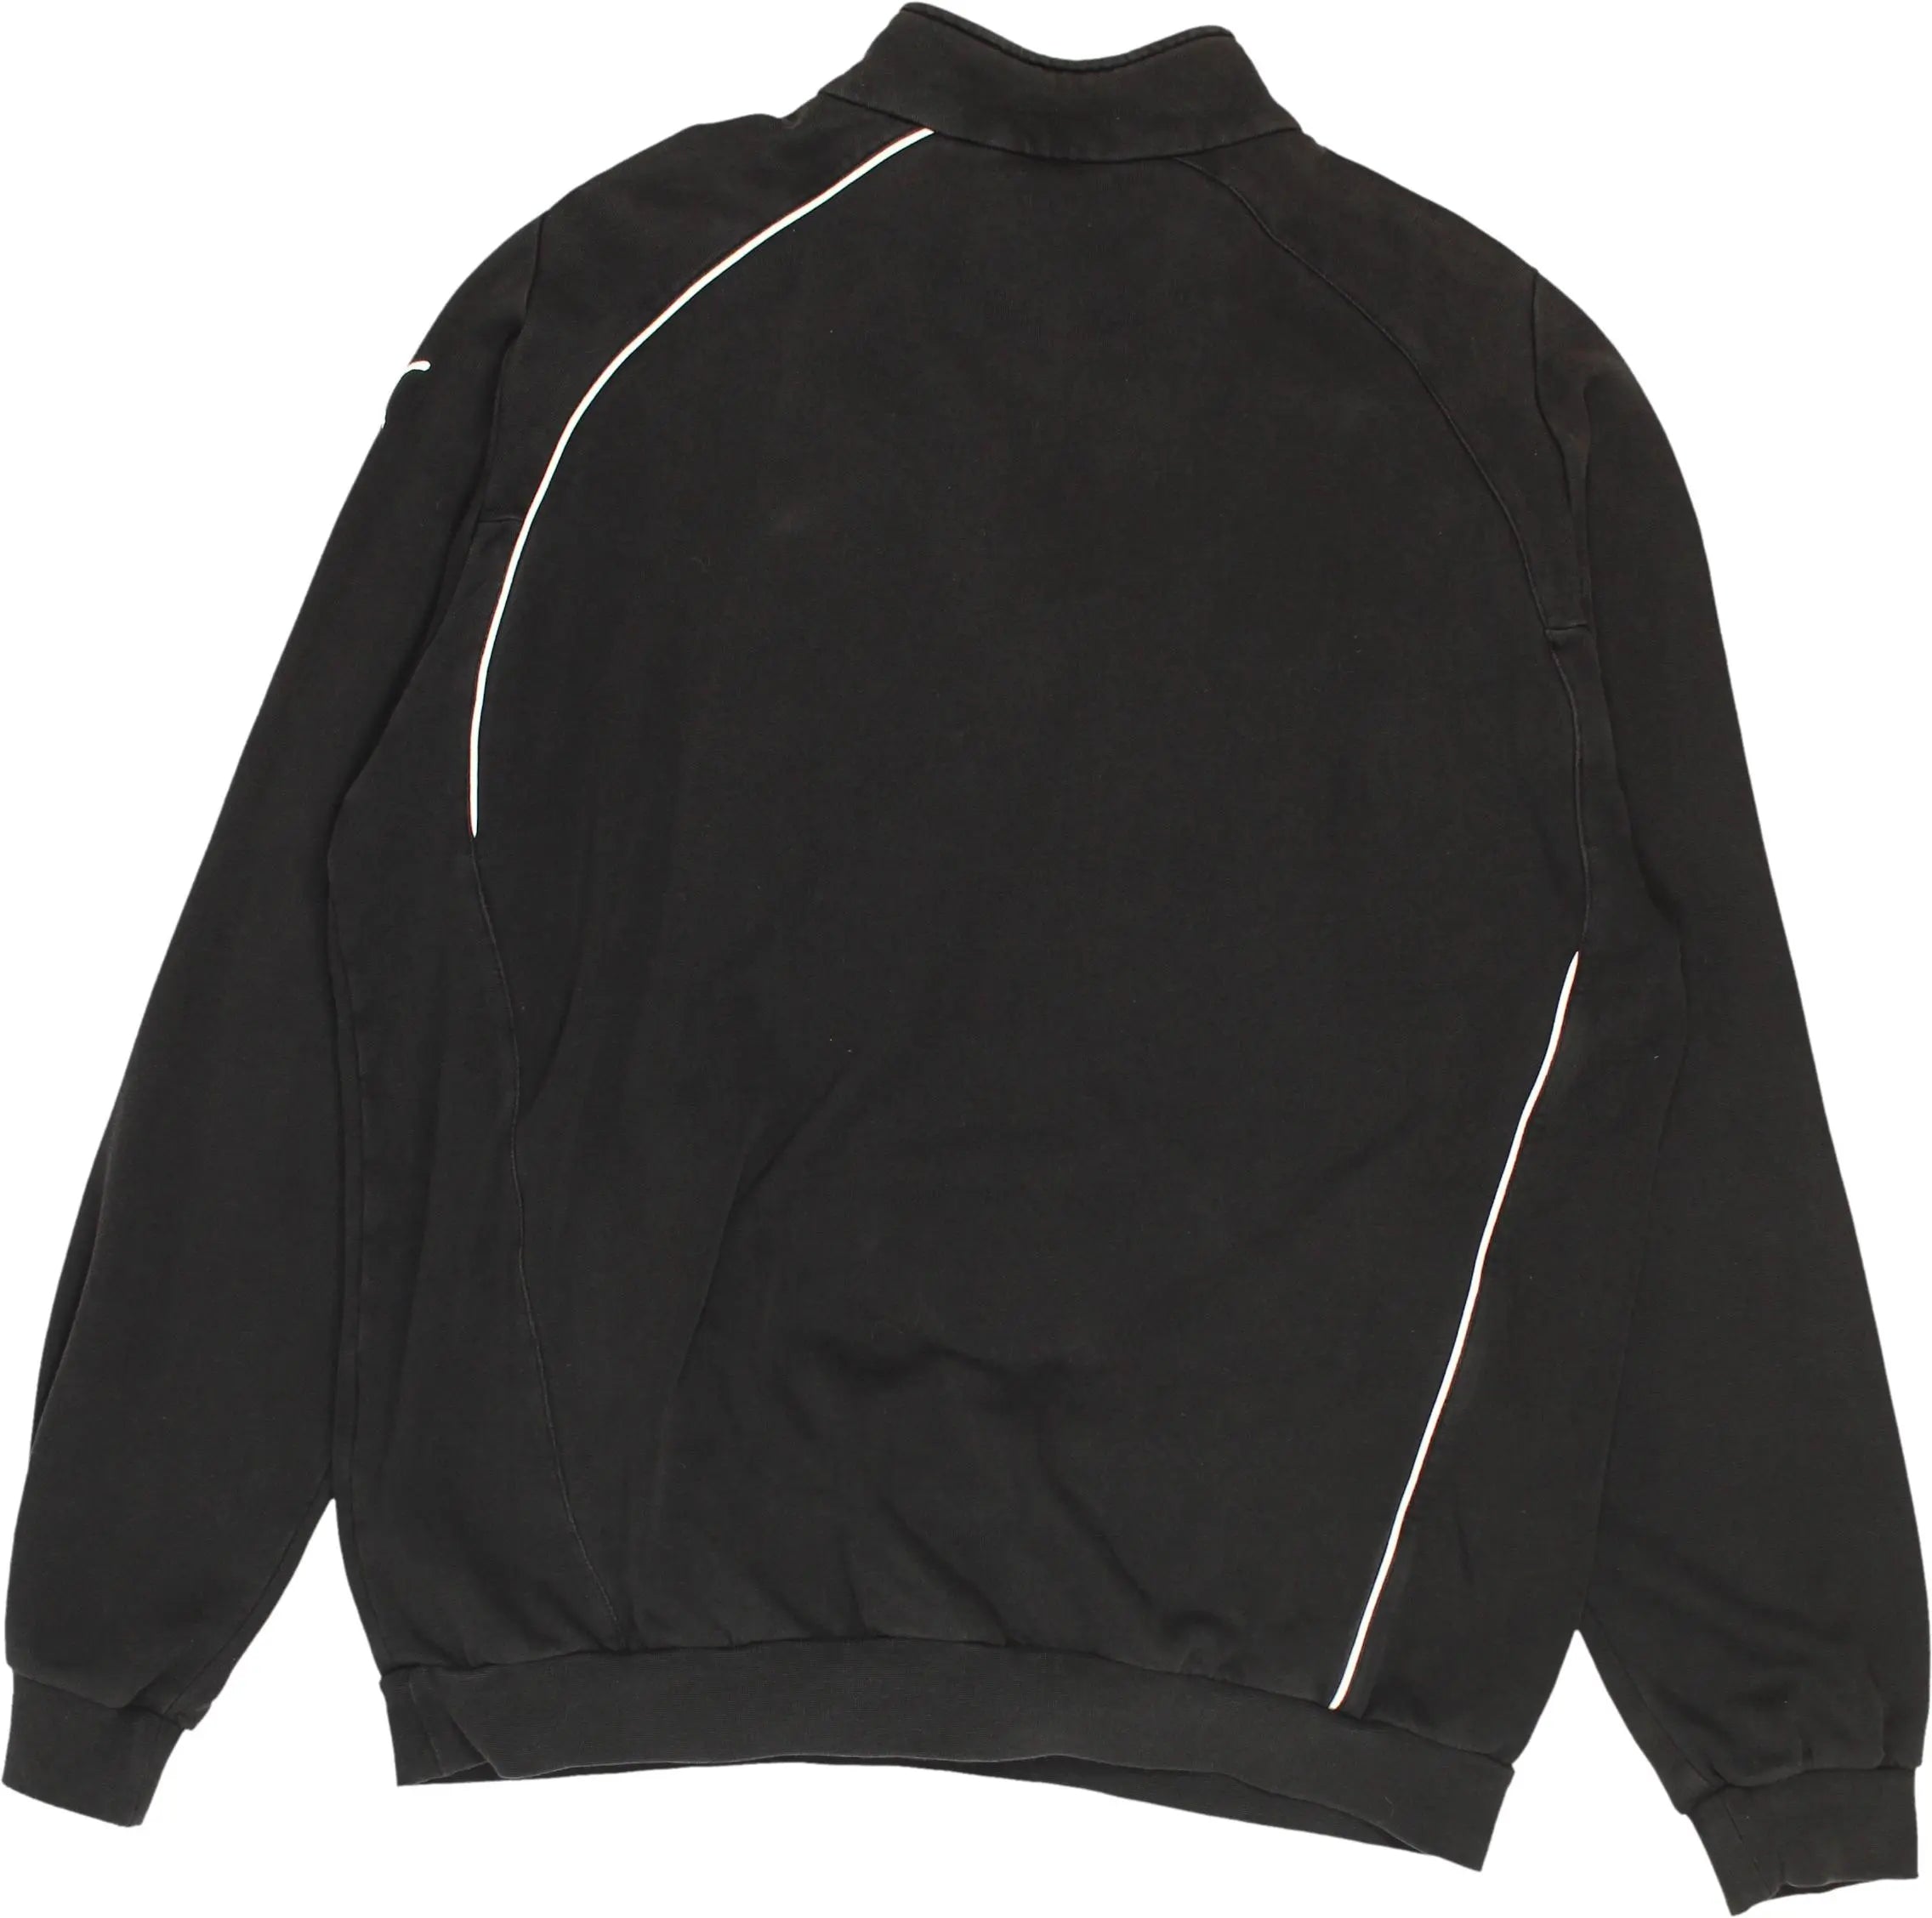 Puma - Black Puma zip-up hoodie- ThriftTale.com - Vintage and second handclothing